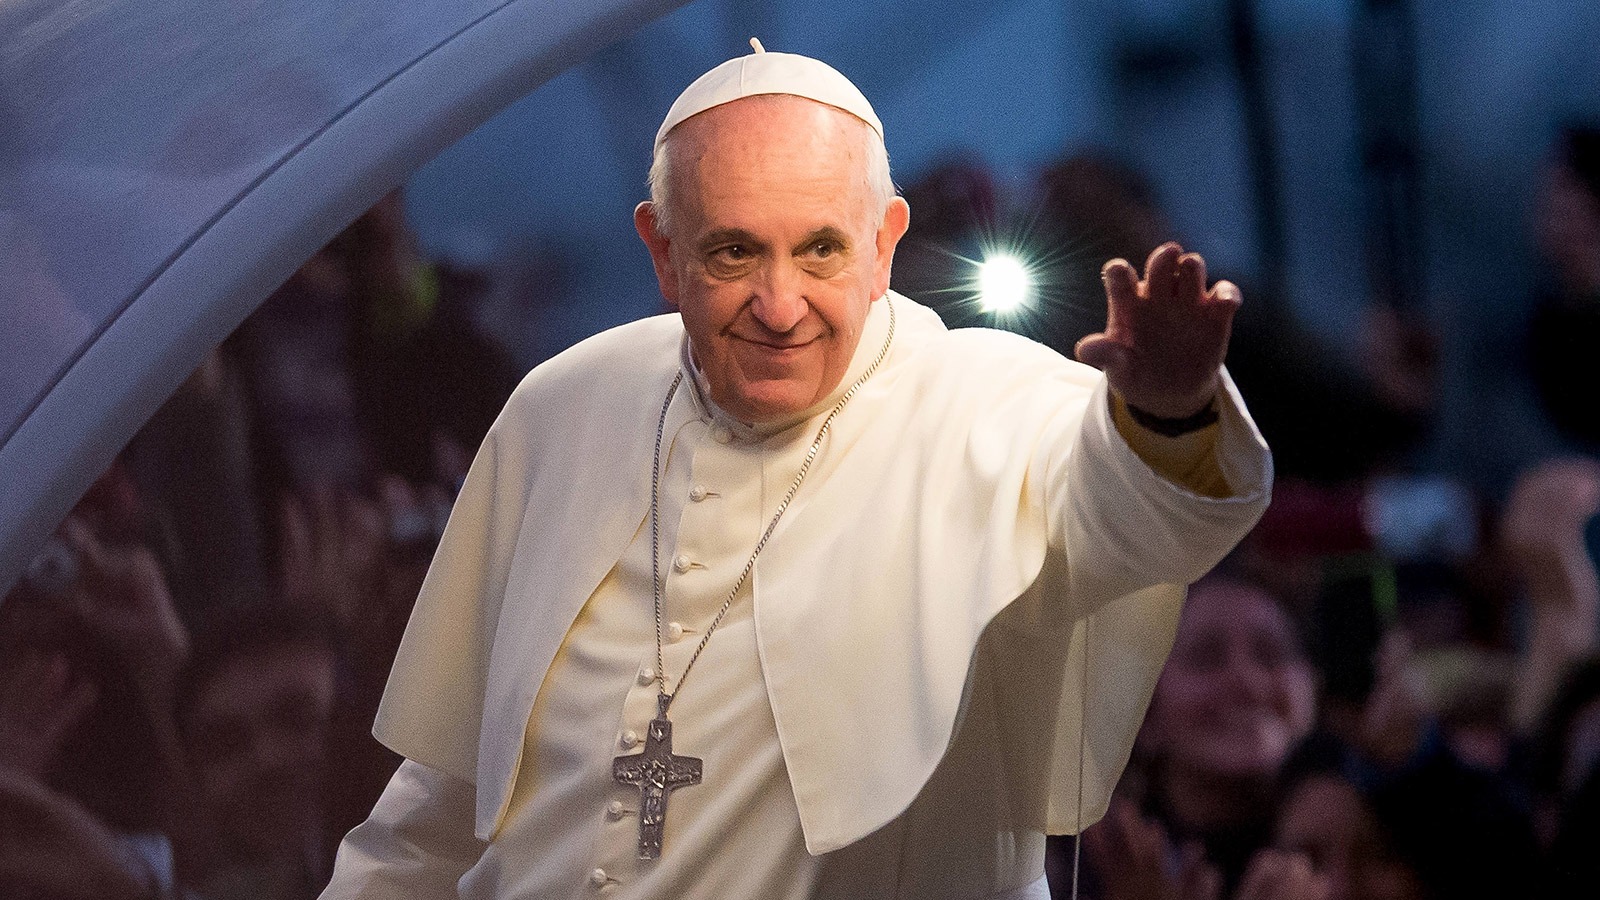 Папа римский говорит. Франциск (папа Римский). Понтифик папа Римский Франциск. Франциск (папа Римский) фото. Франциск 1 папа Римский.